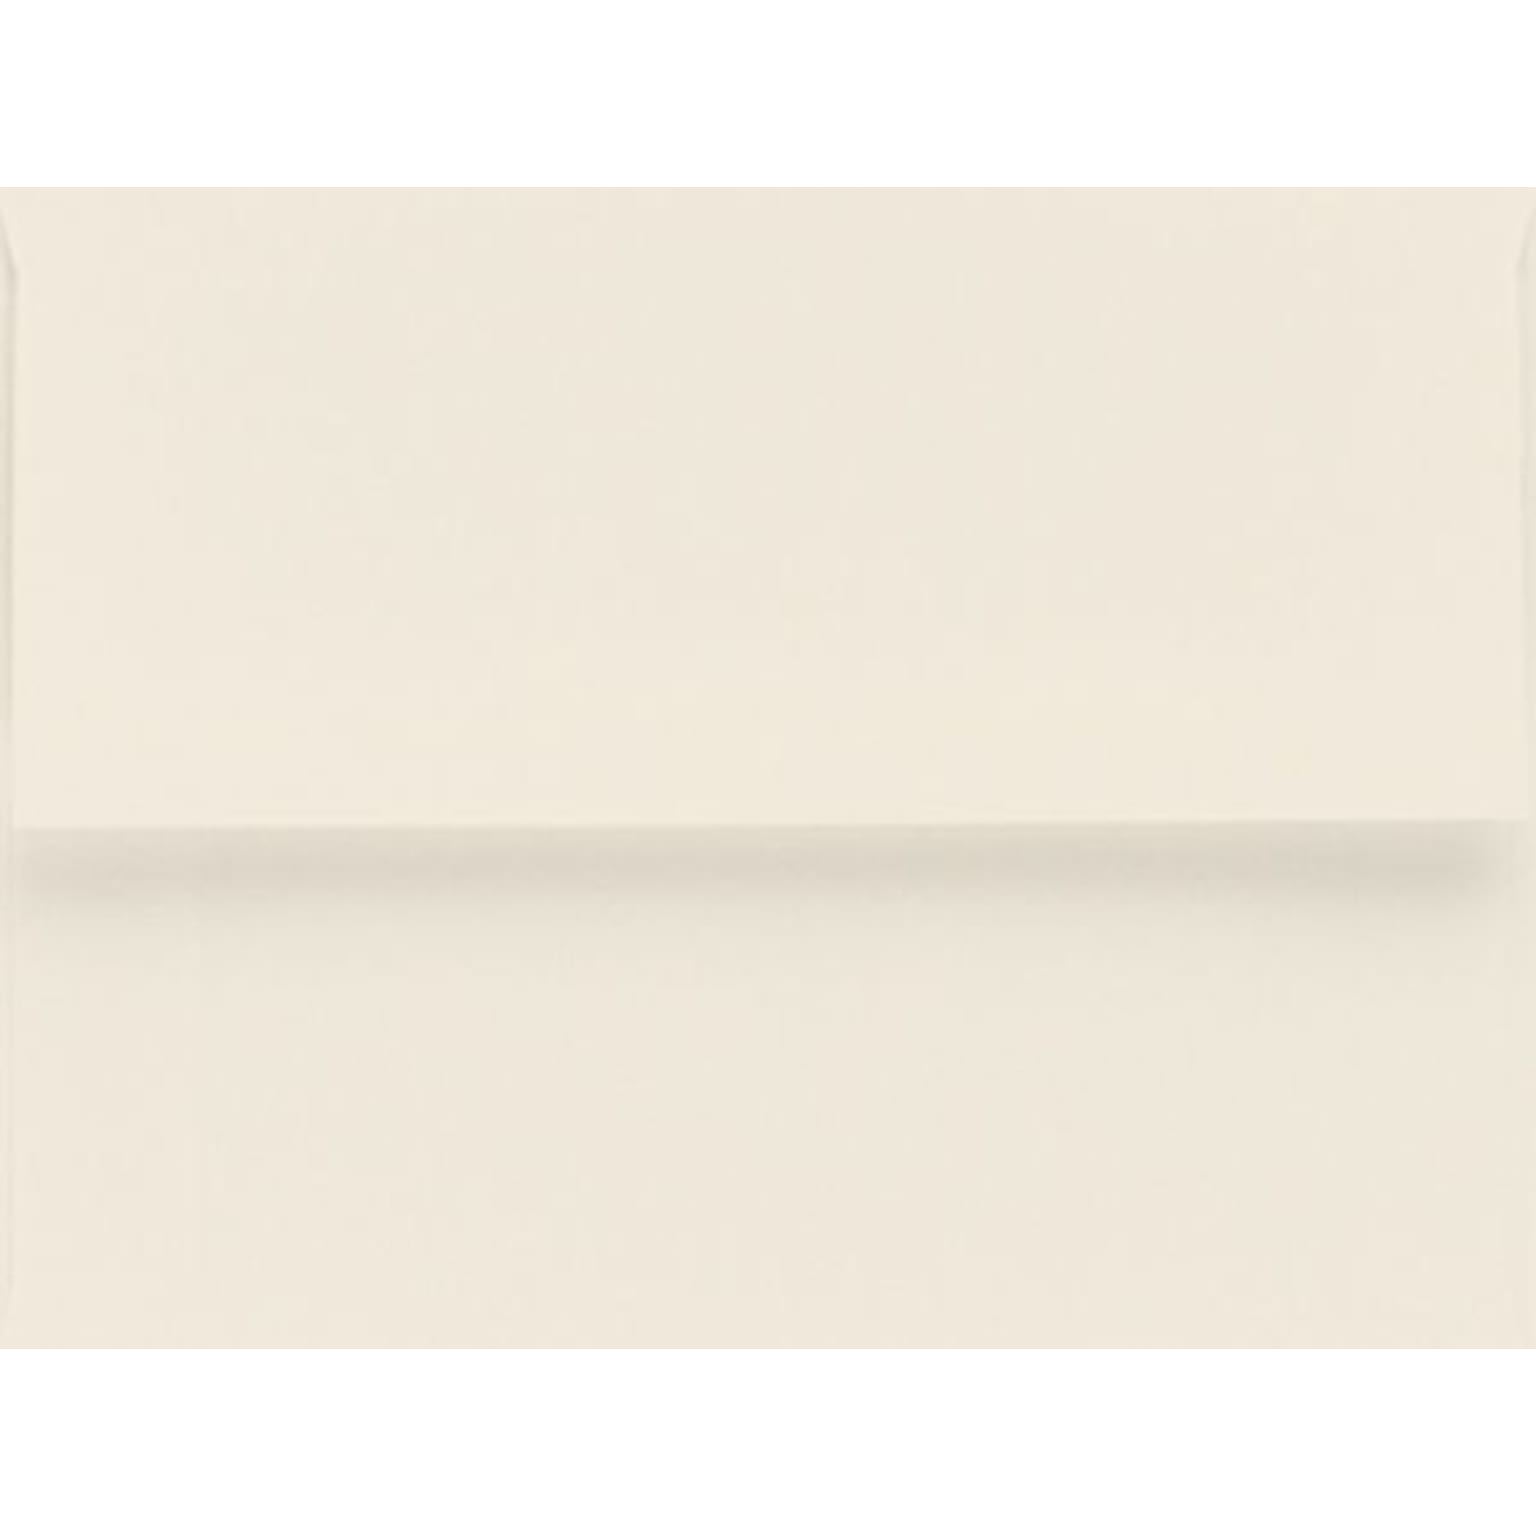 Masterpiece Studio® A-2 Envelopes, Ivory